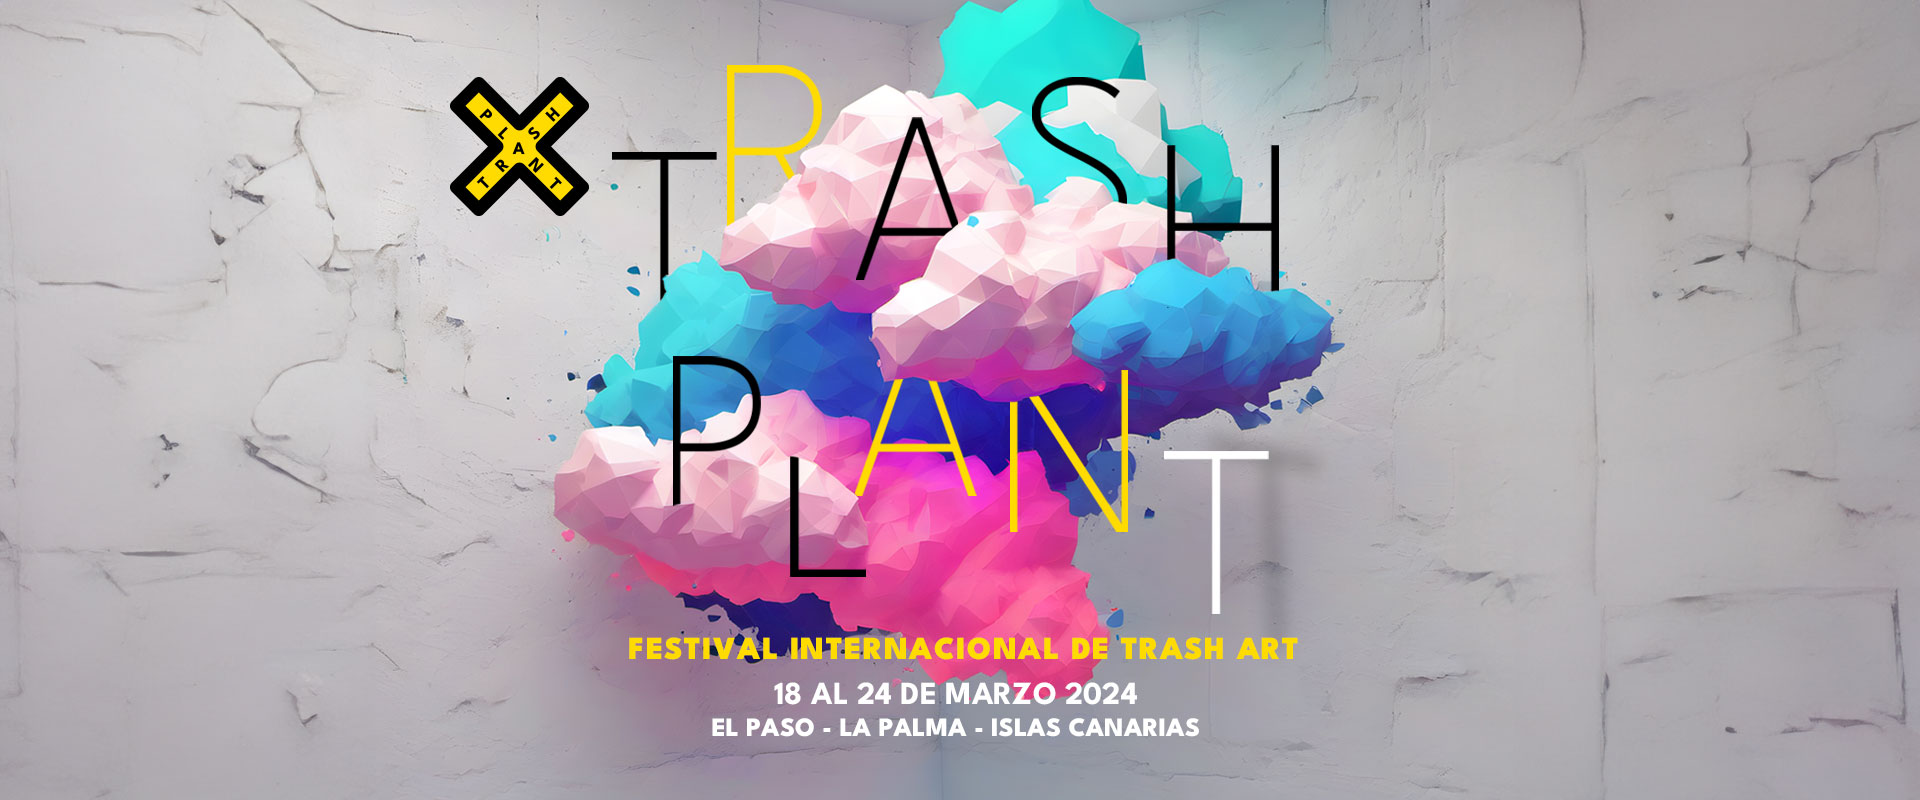 TrashPlant Festival 2024